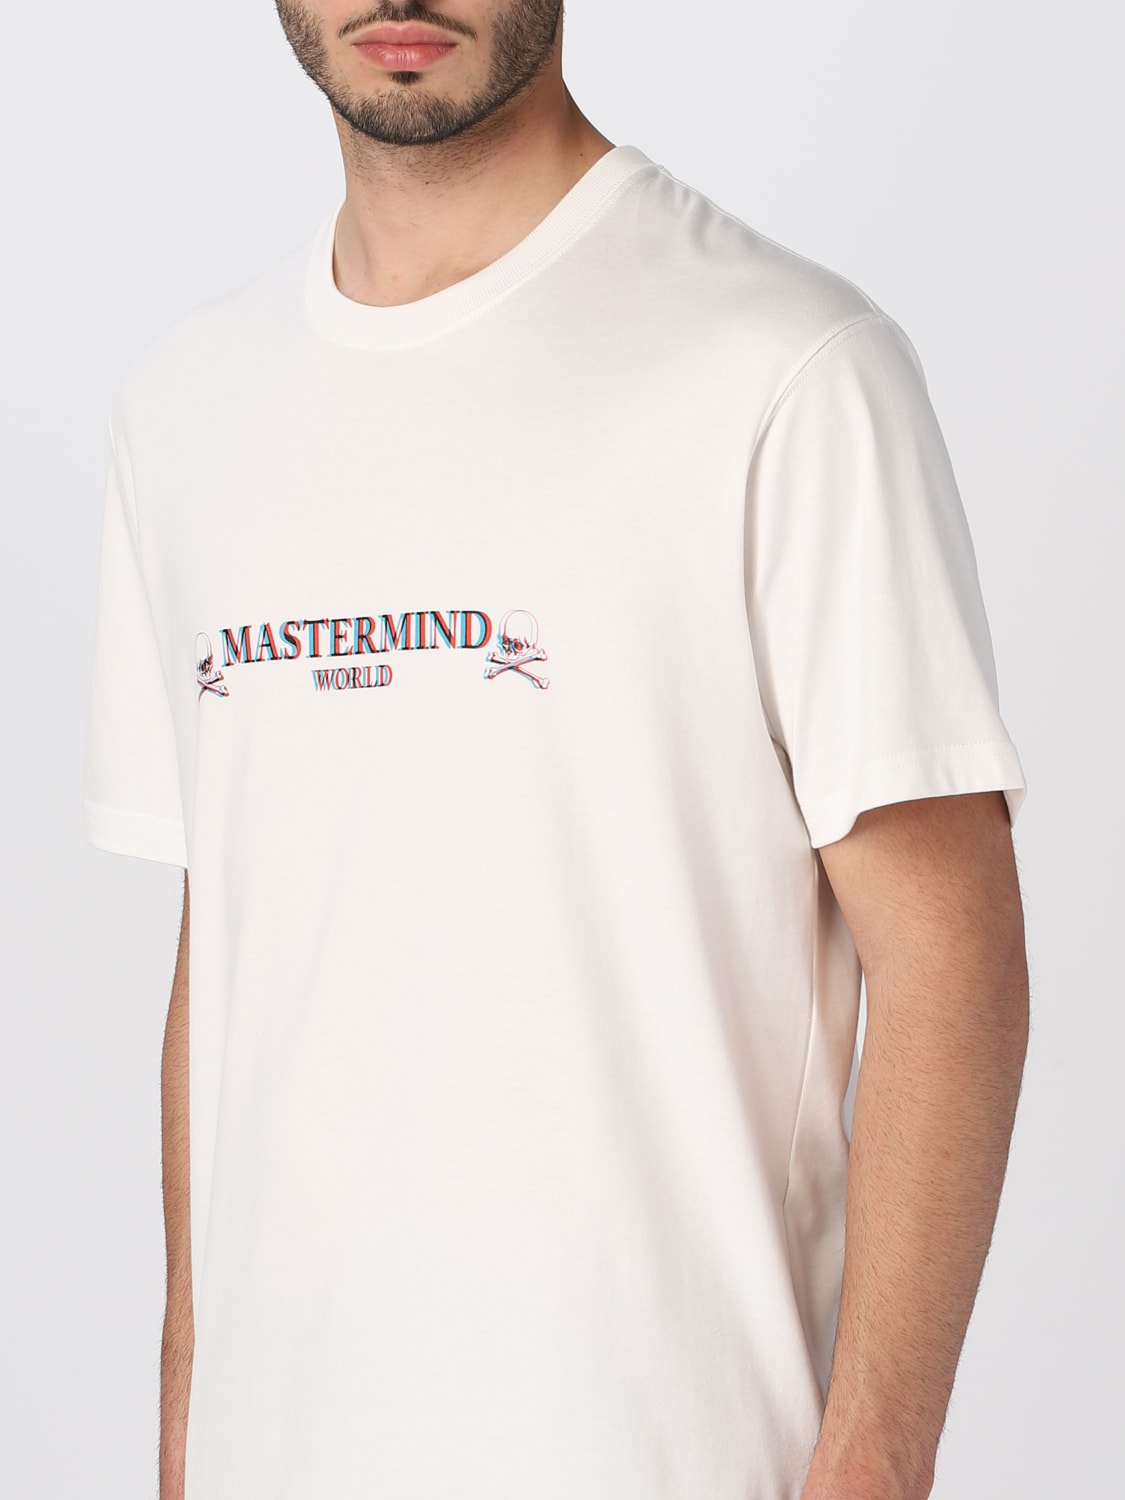 MASTERMIND WORLD: t-shirt for man - White | Mastermind World t-shirt ...